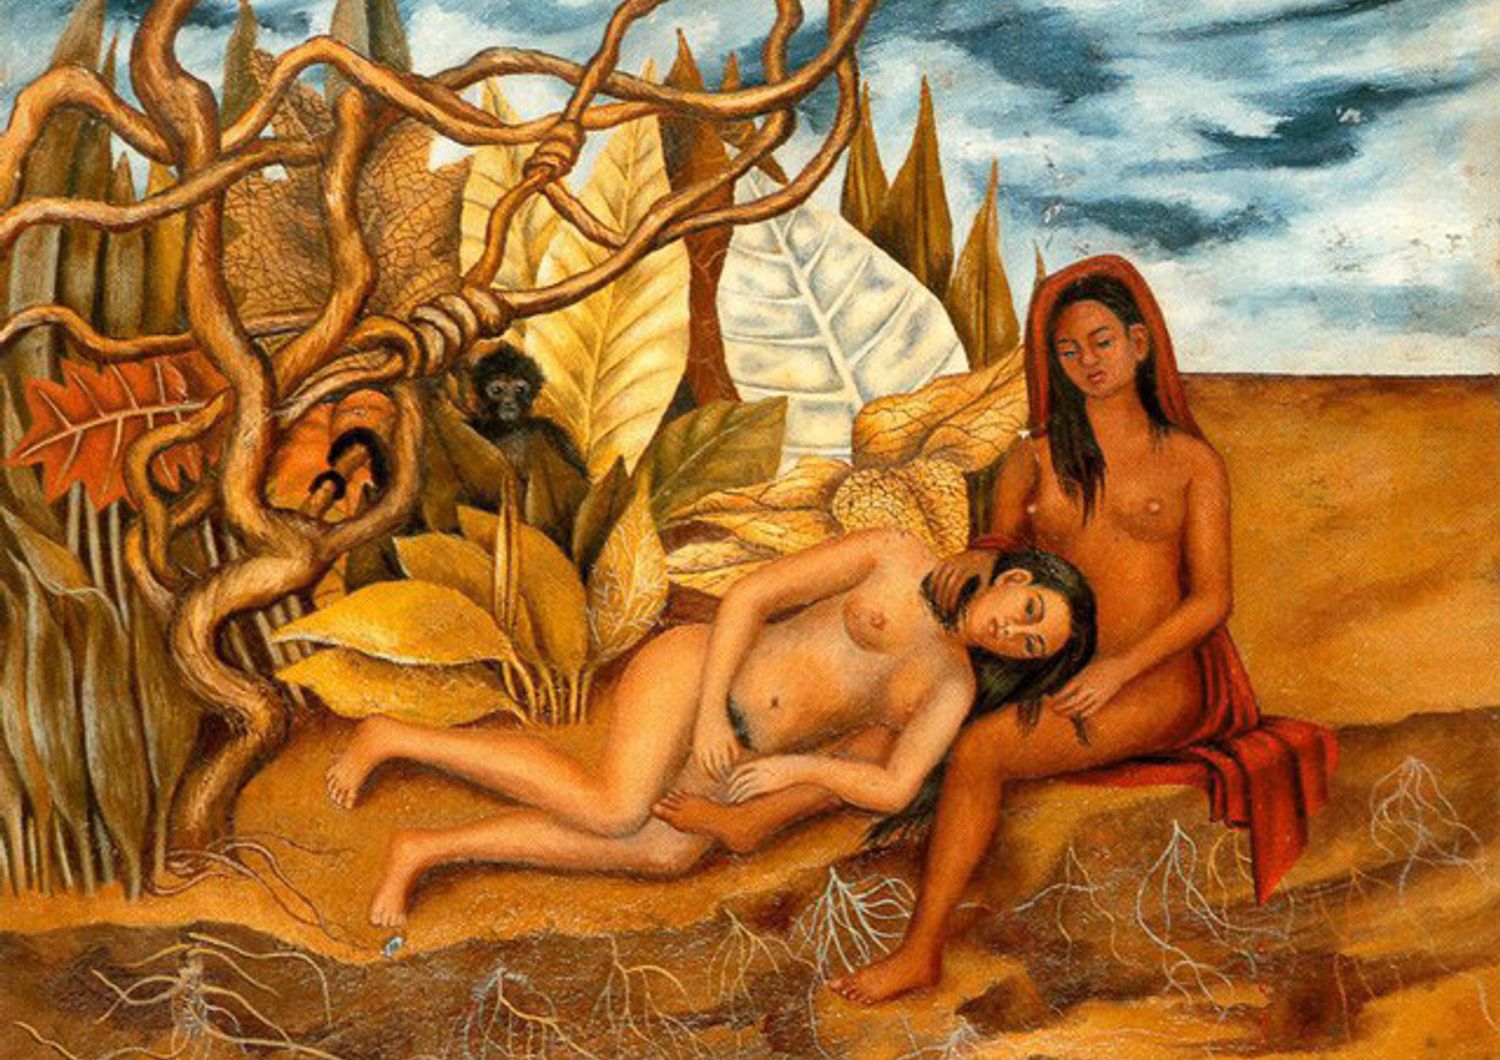 Frida Kahlo due nudi nel bosco&nbsp;